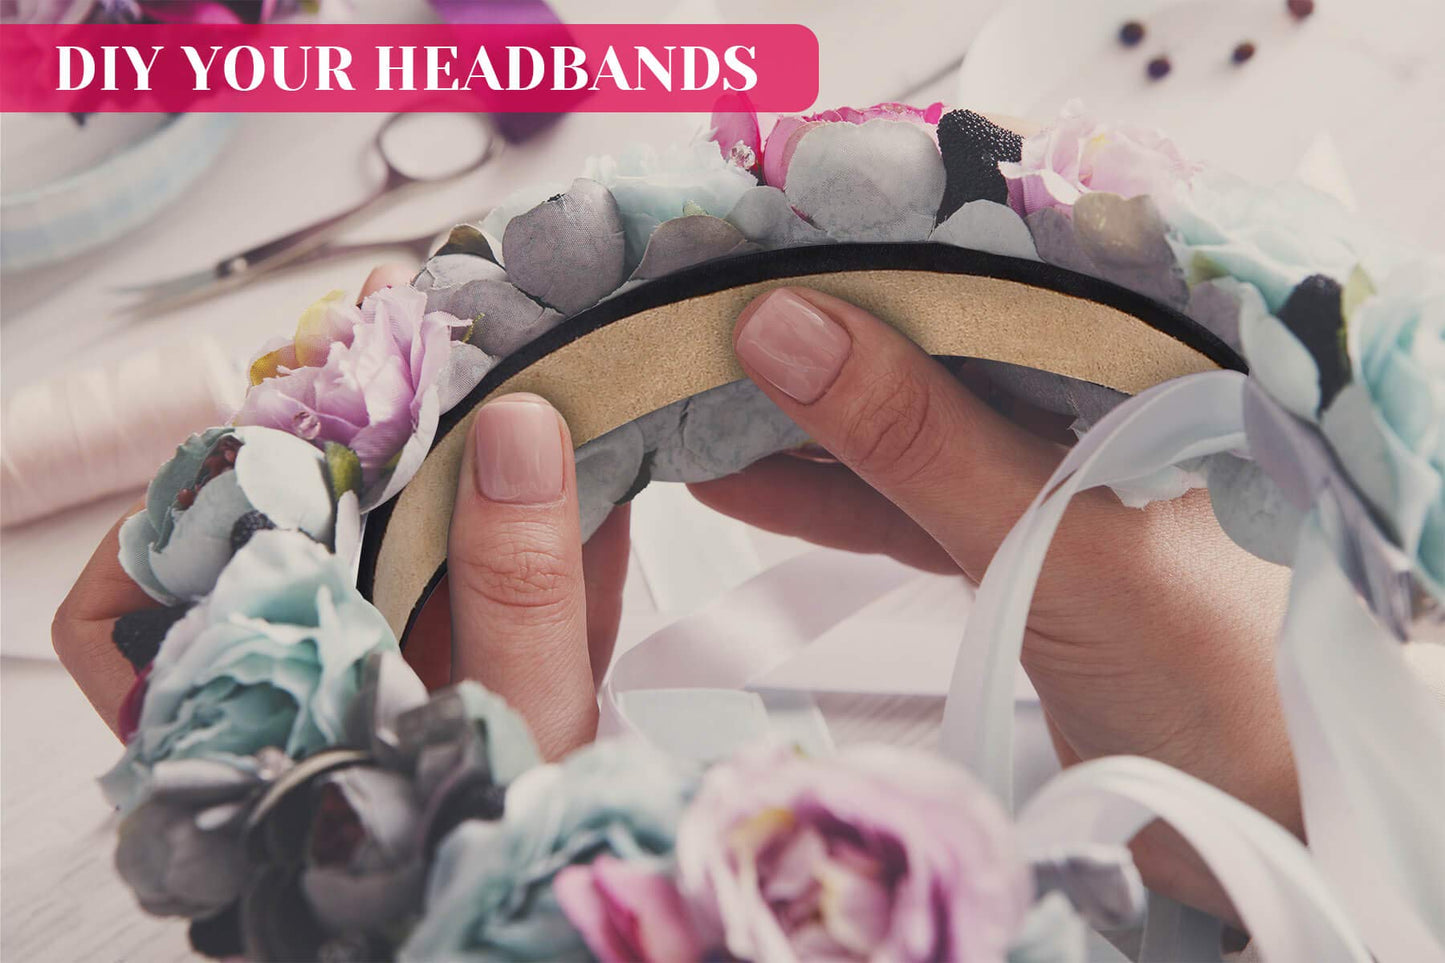 anezus 16 Pcs Satin Headbands Bulk 1 Inch Anti-slip Black Ribbon Hair Bands Plain Hard Headbands for Women Girls DIY Craft Hair Accessories (Black)